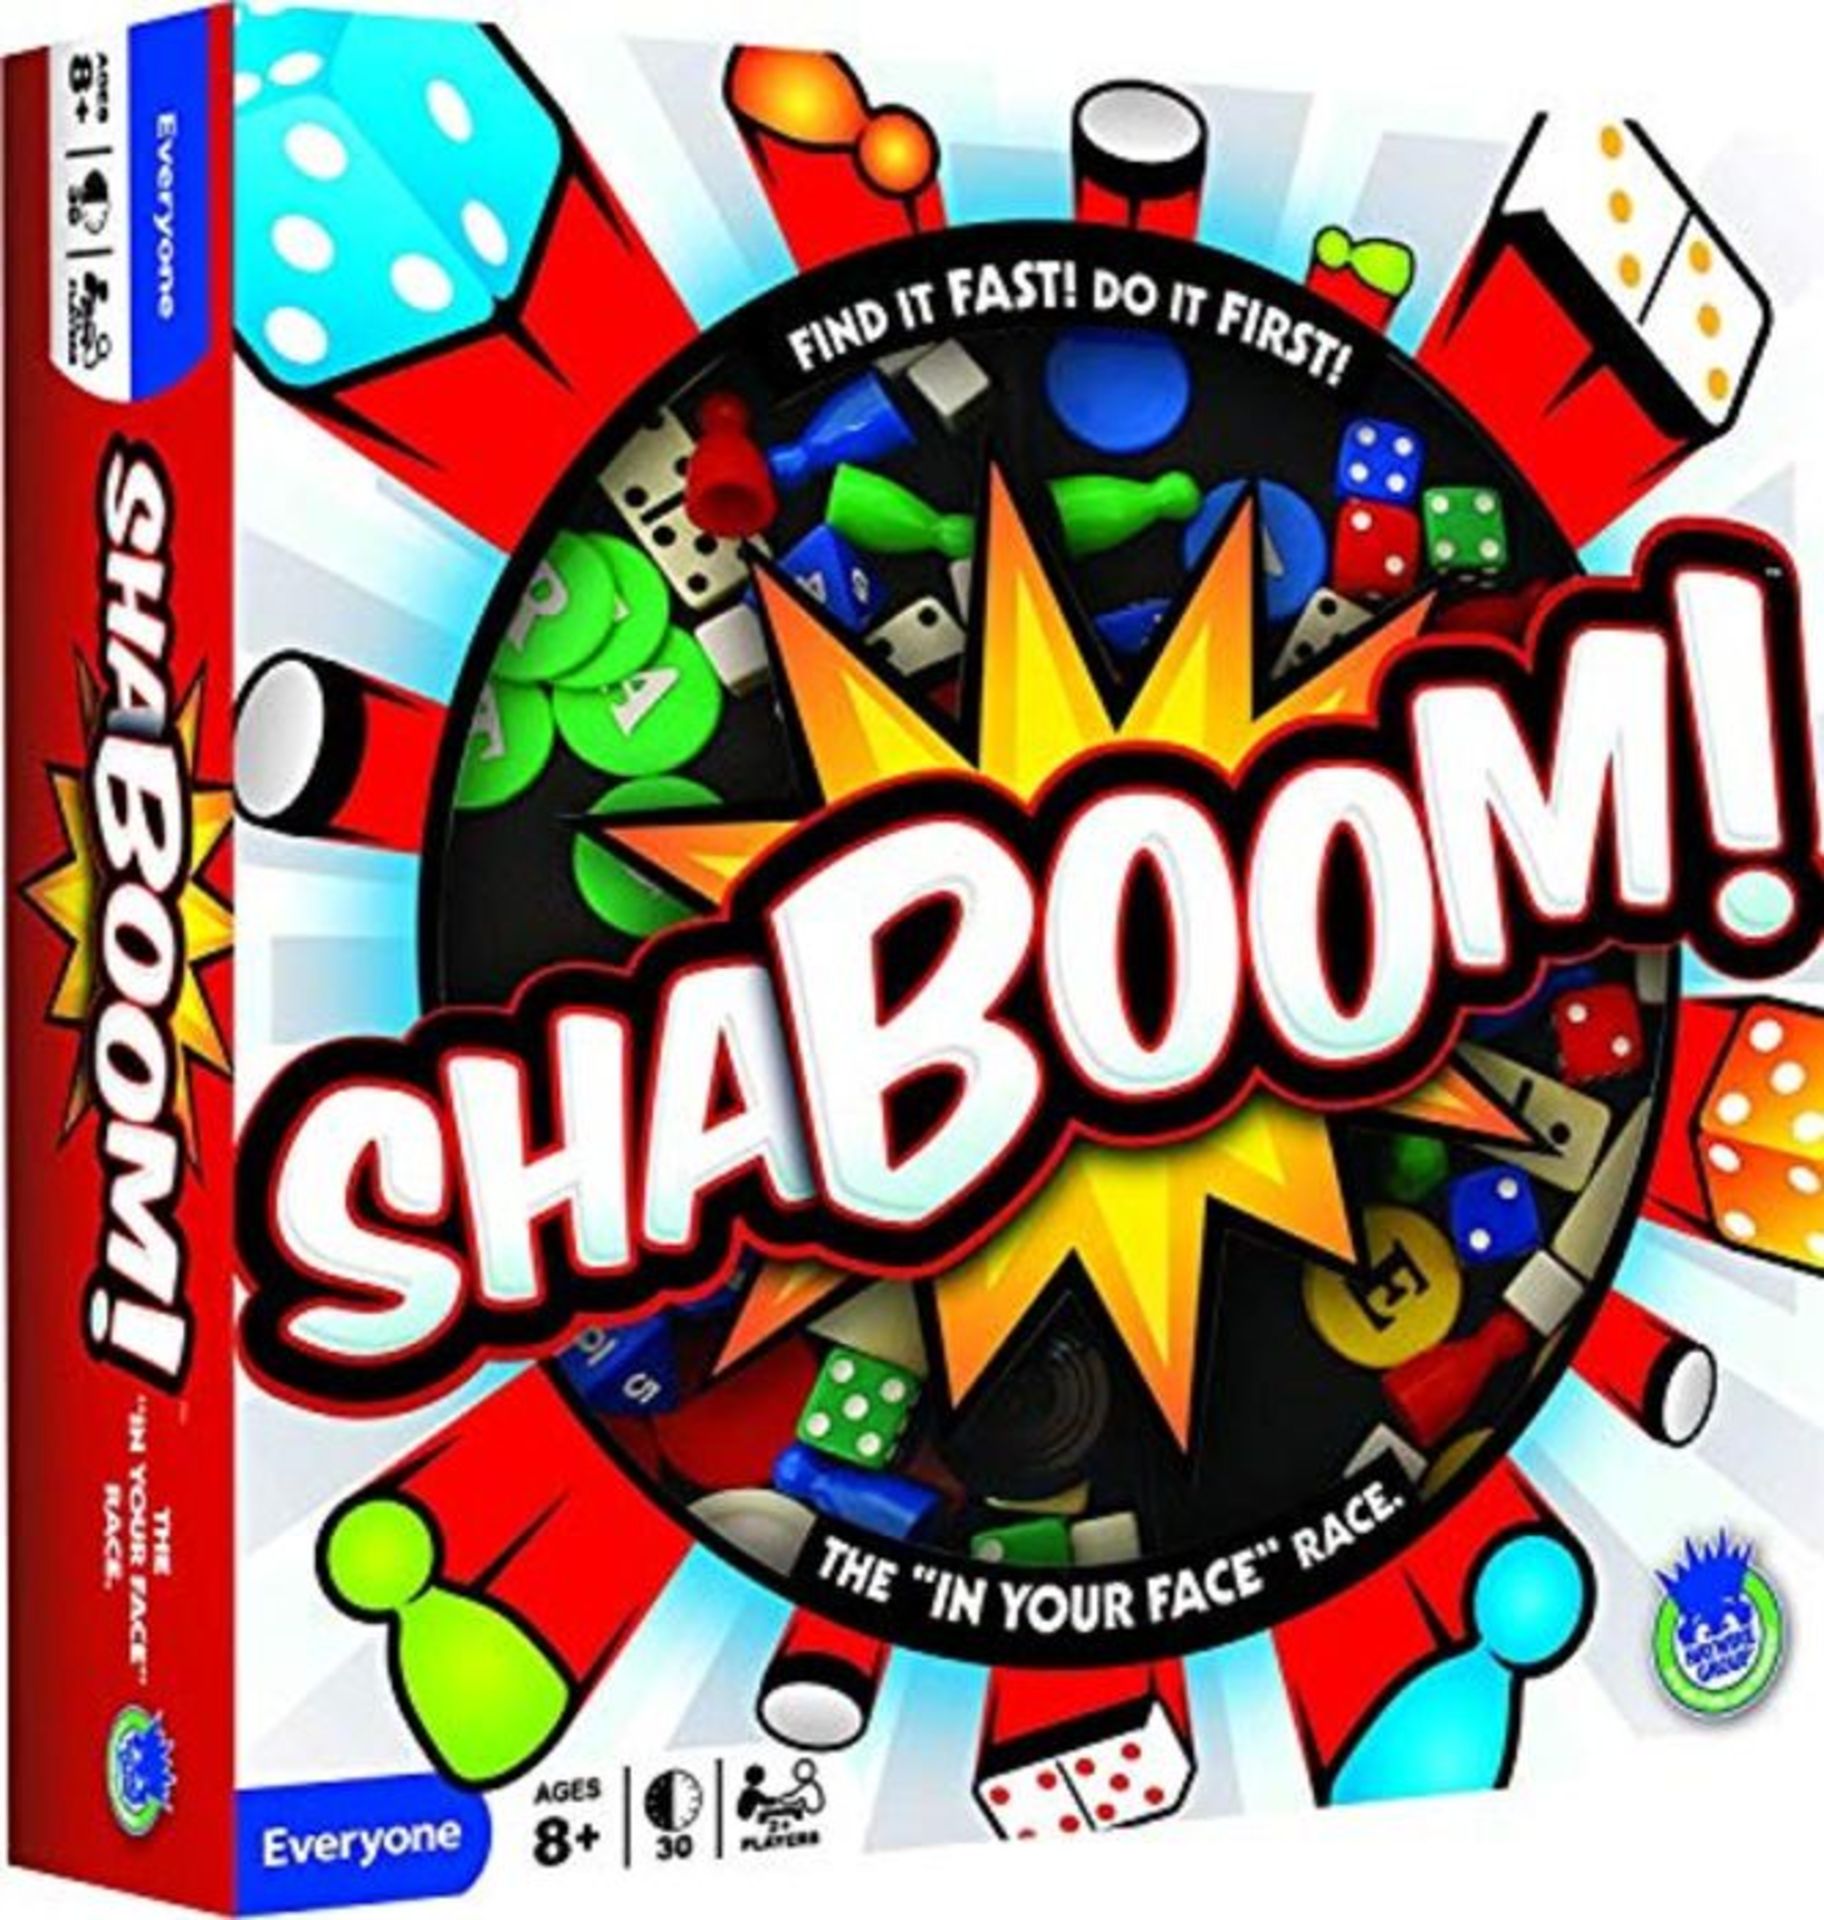 University Games 117 Shaboom Board Game, Multi